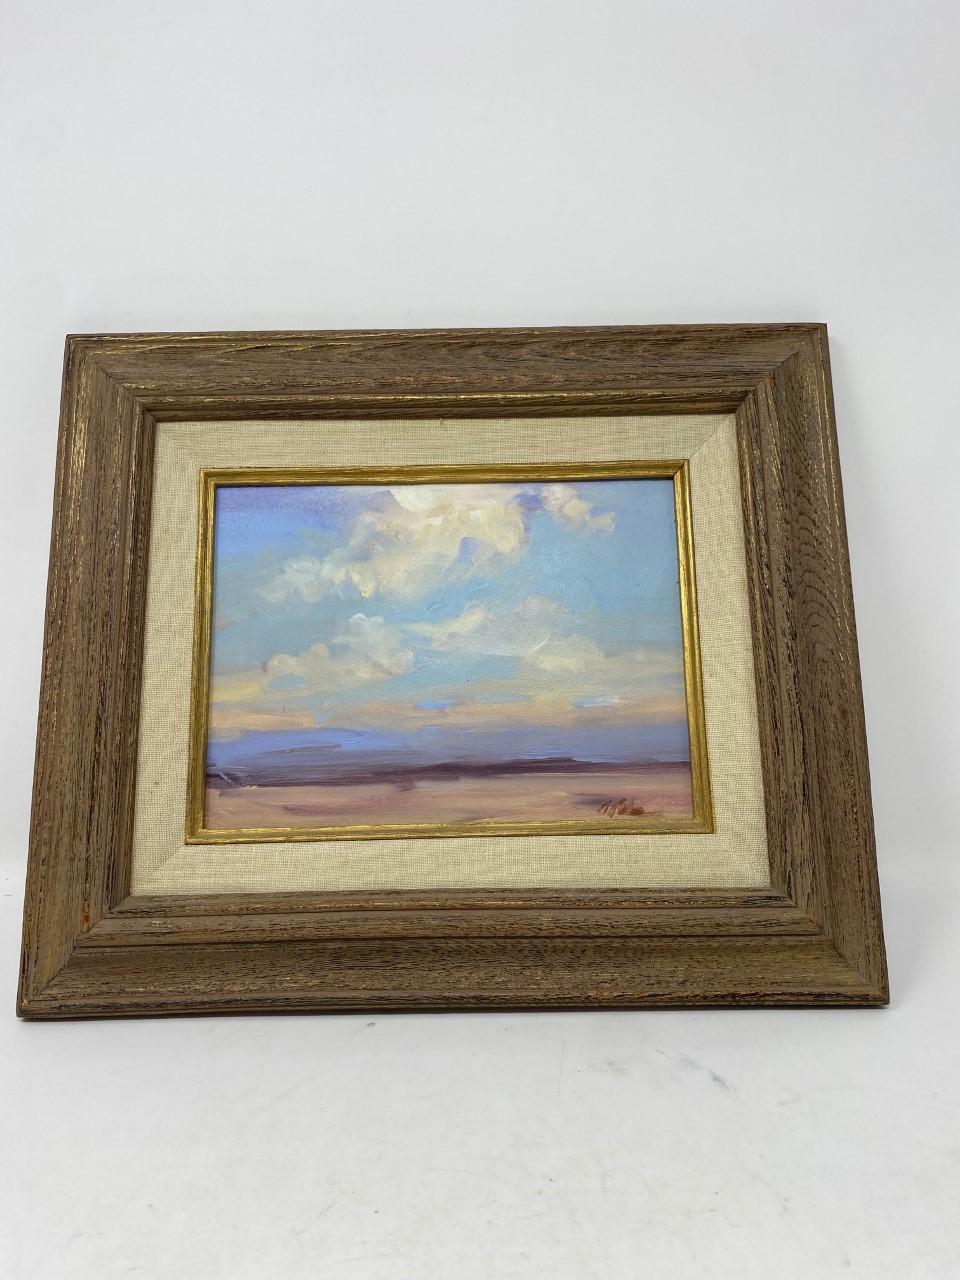 American Vintage George Pate “New Mexico Desert” Original Painting